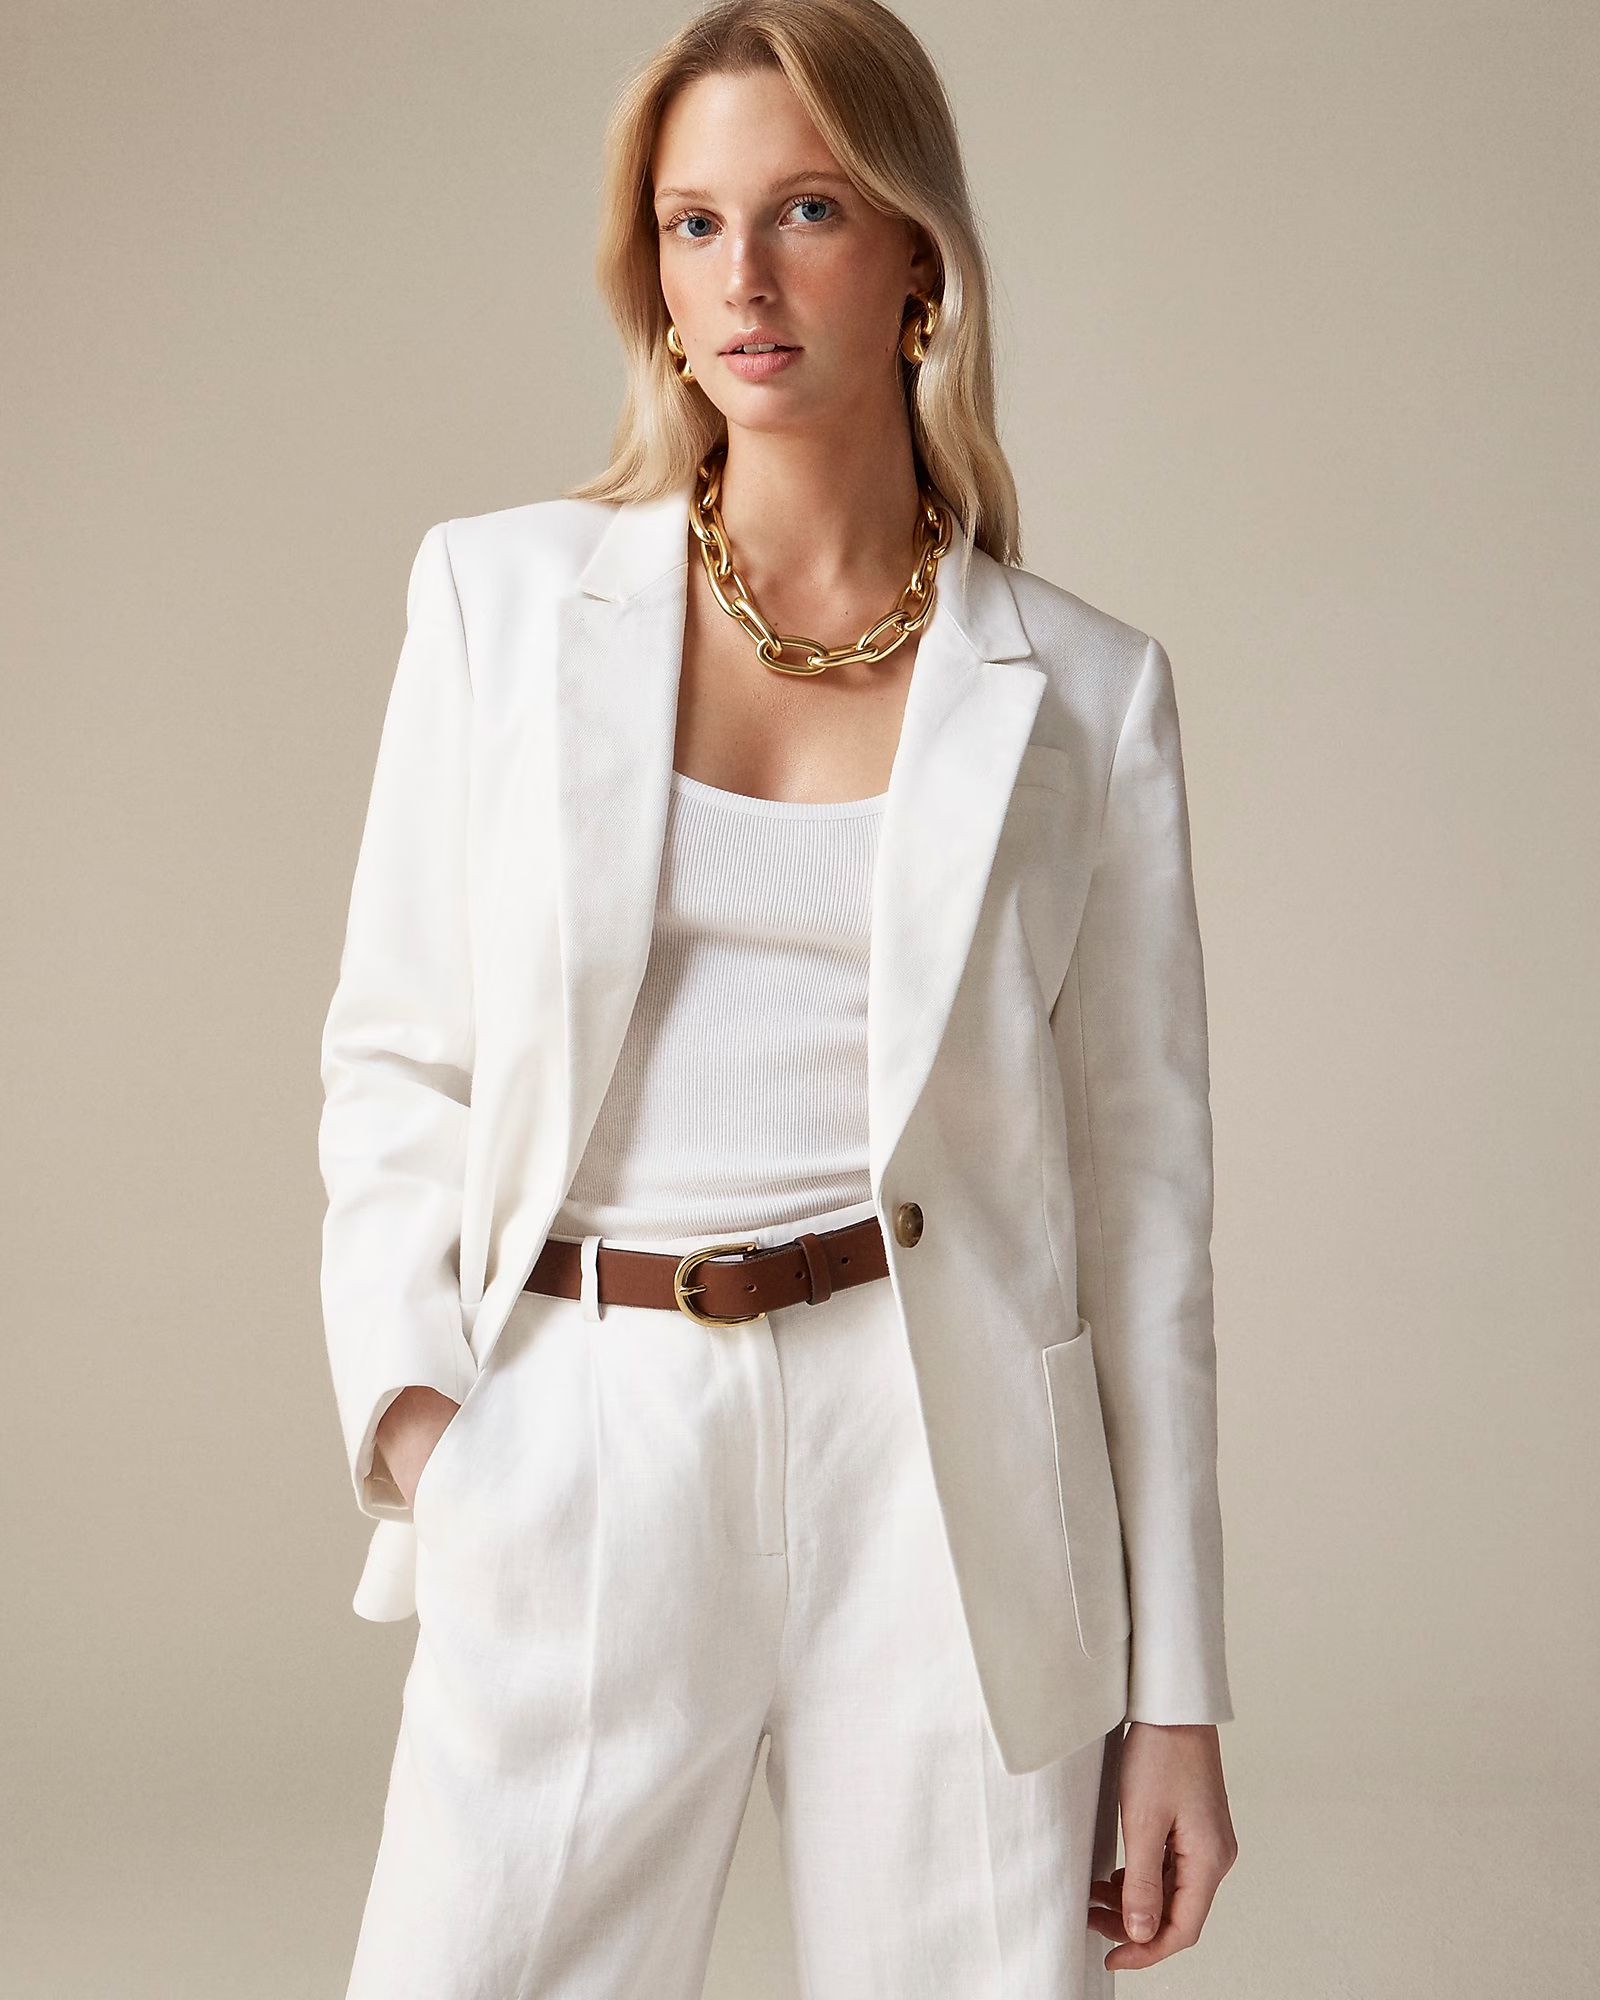 best seller4.6(34 REVIEWS)Helena blazer in stretch linen blend$169.50$198.00 (14% Off)Limited tim... | J.Crew US